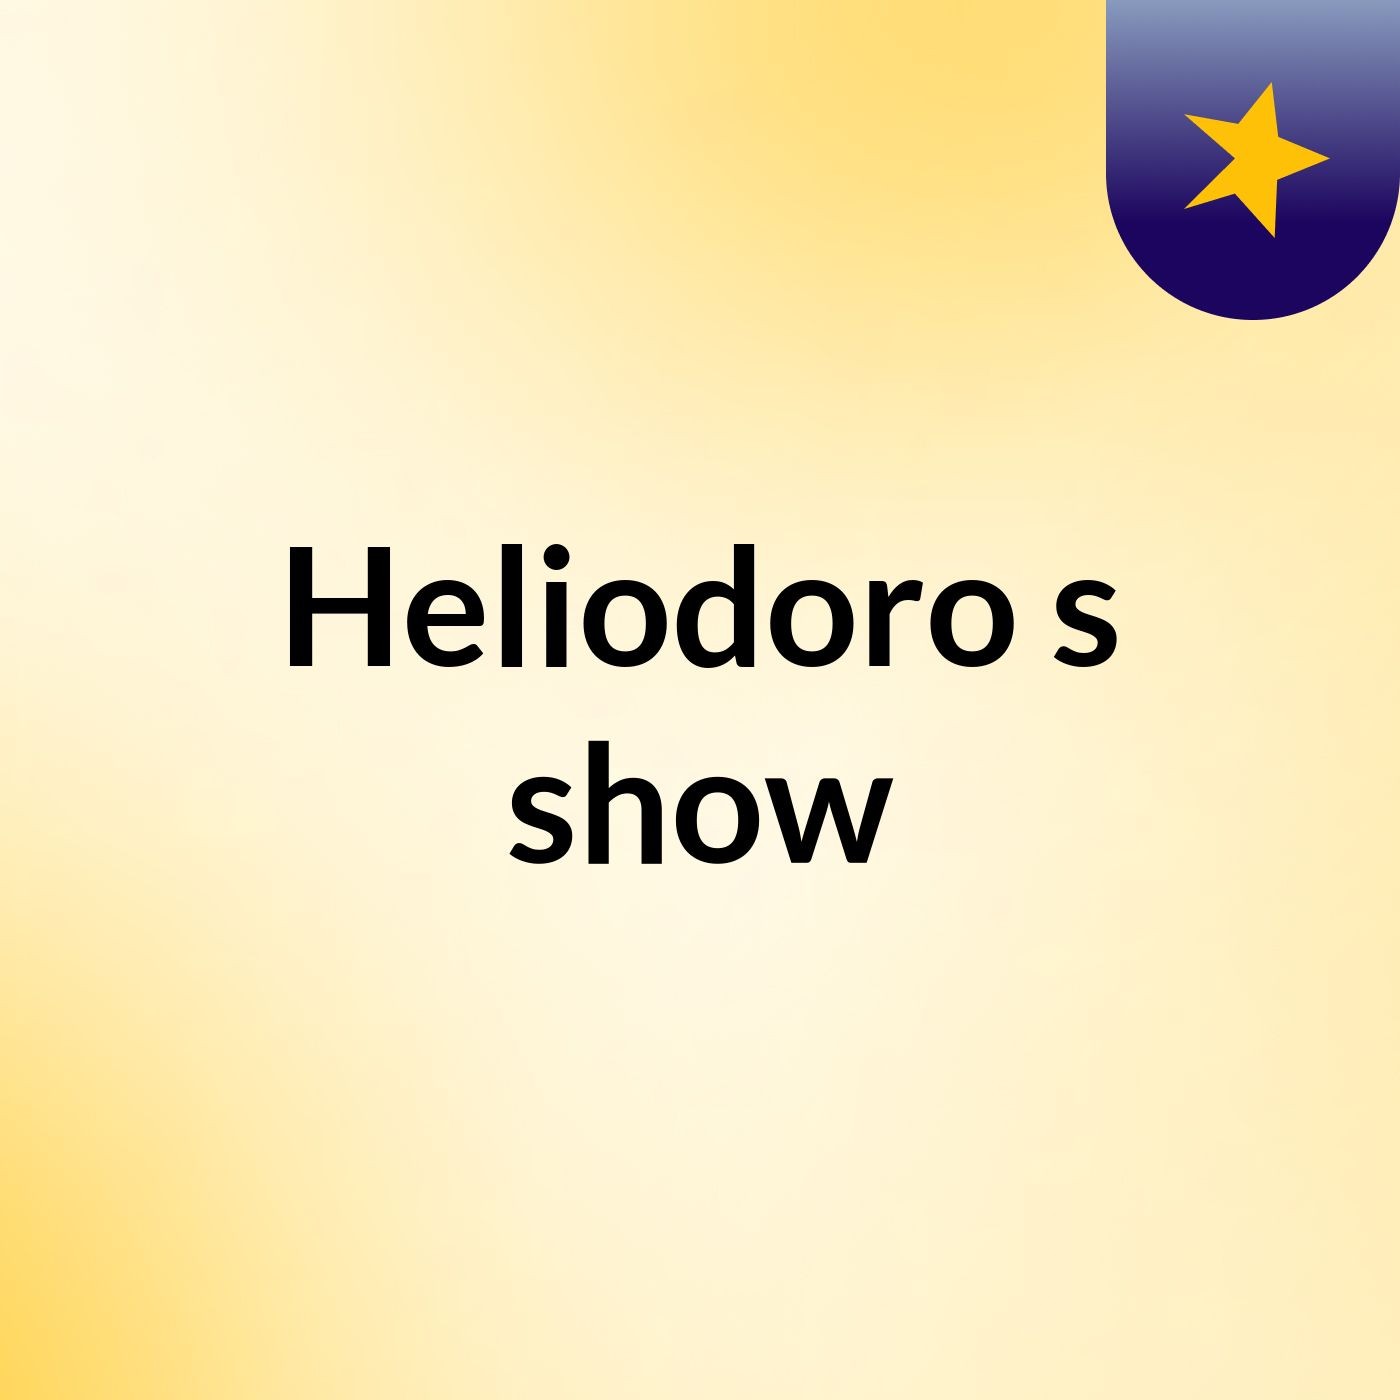 Heliodoro's show